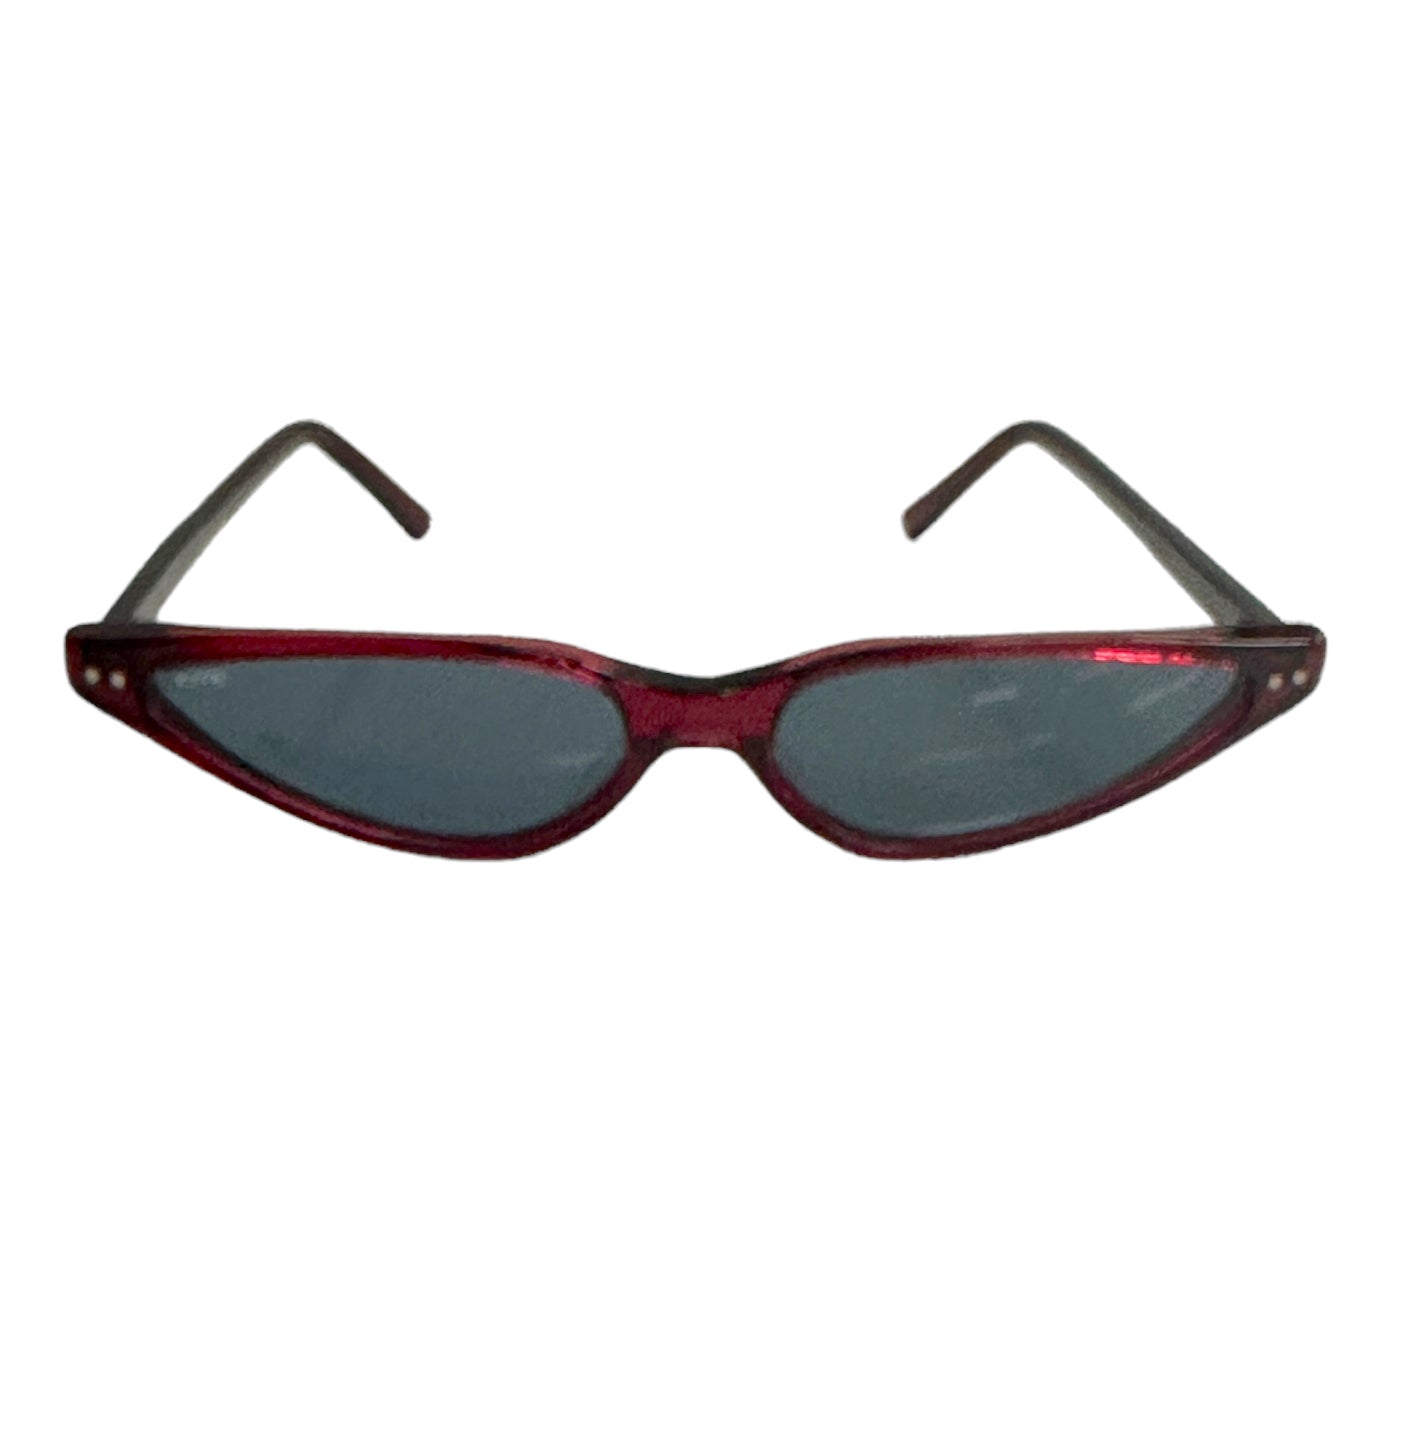 Kyme GINA5 55mm New Sunglasses